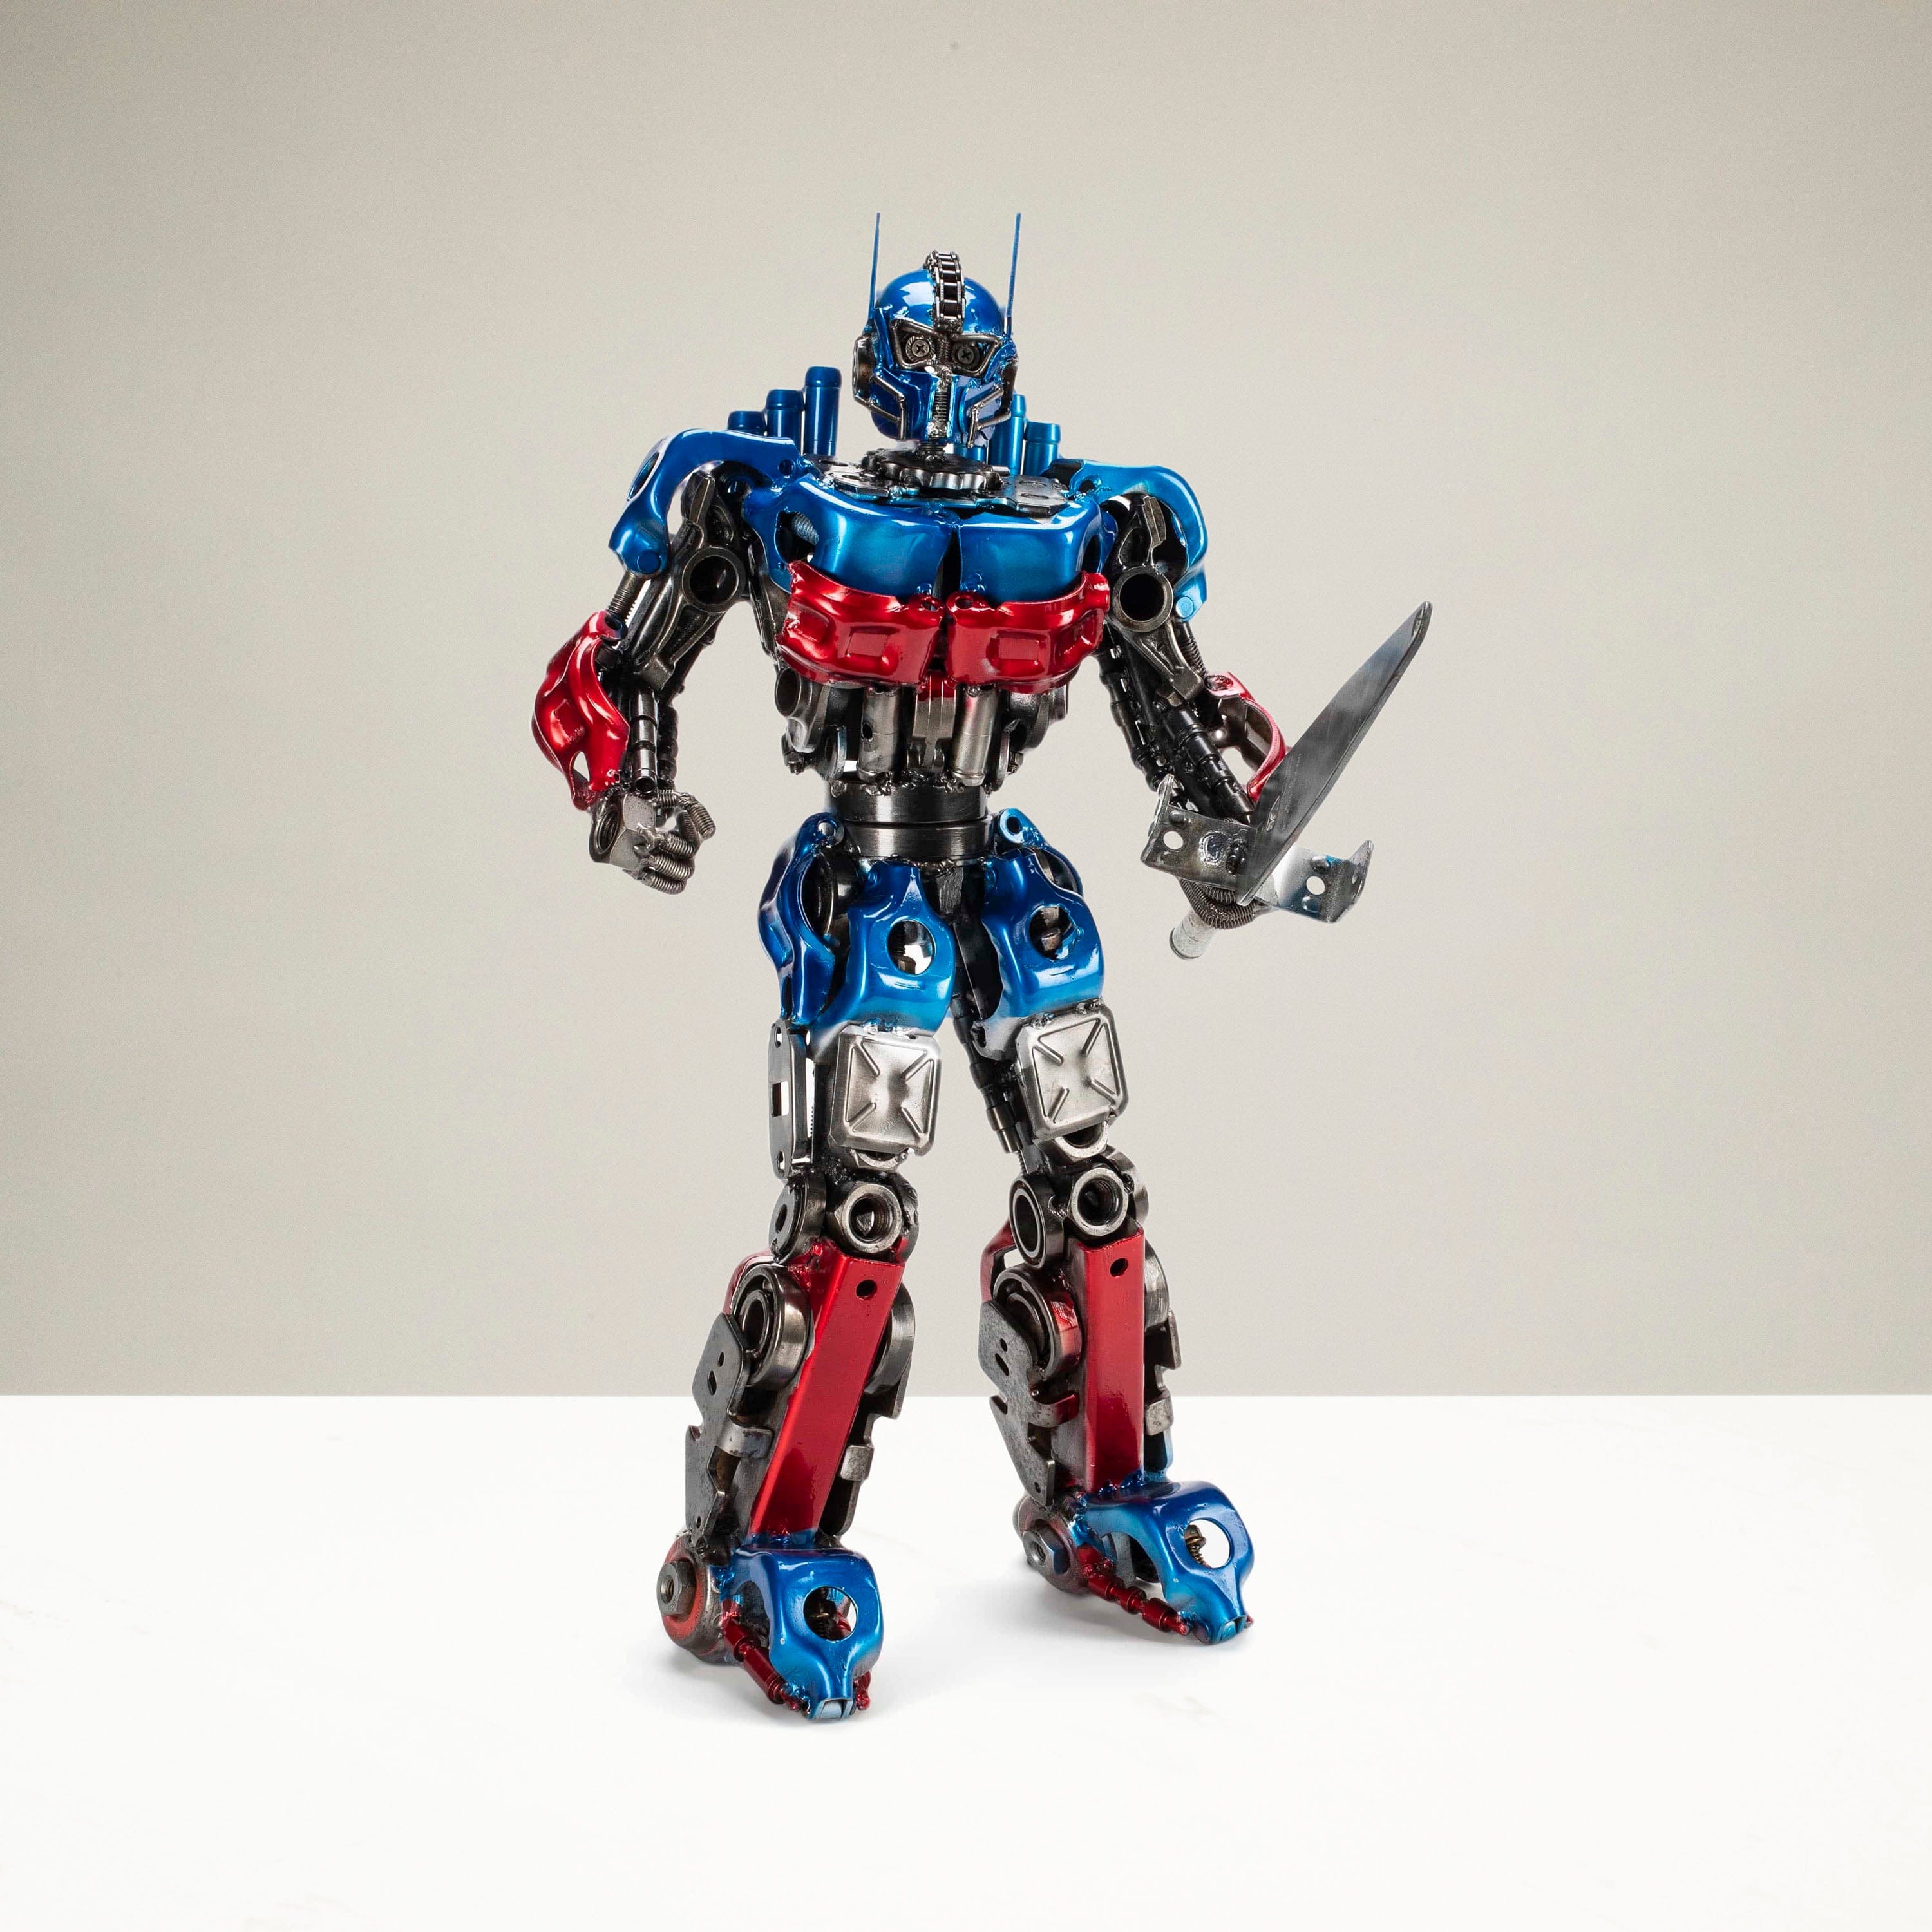 Kalifano Recycled Metal Art 22" Optimus Prime Inspired Recycled Metal Art Sculpture RMS-OP56x36-S